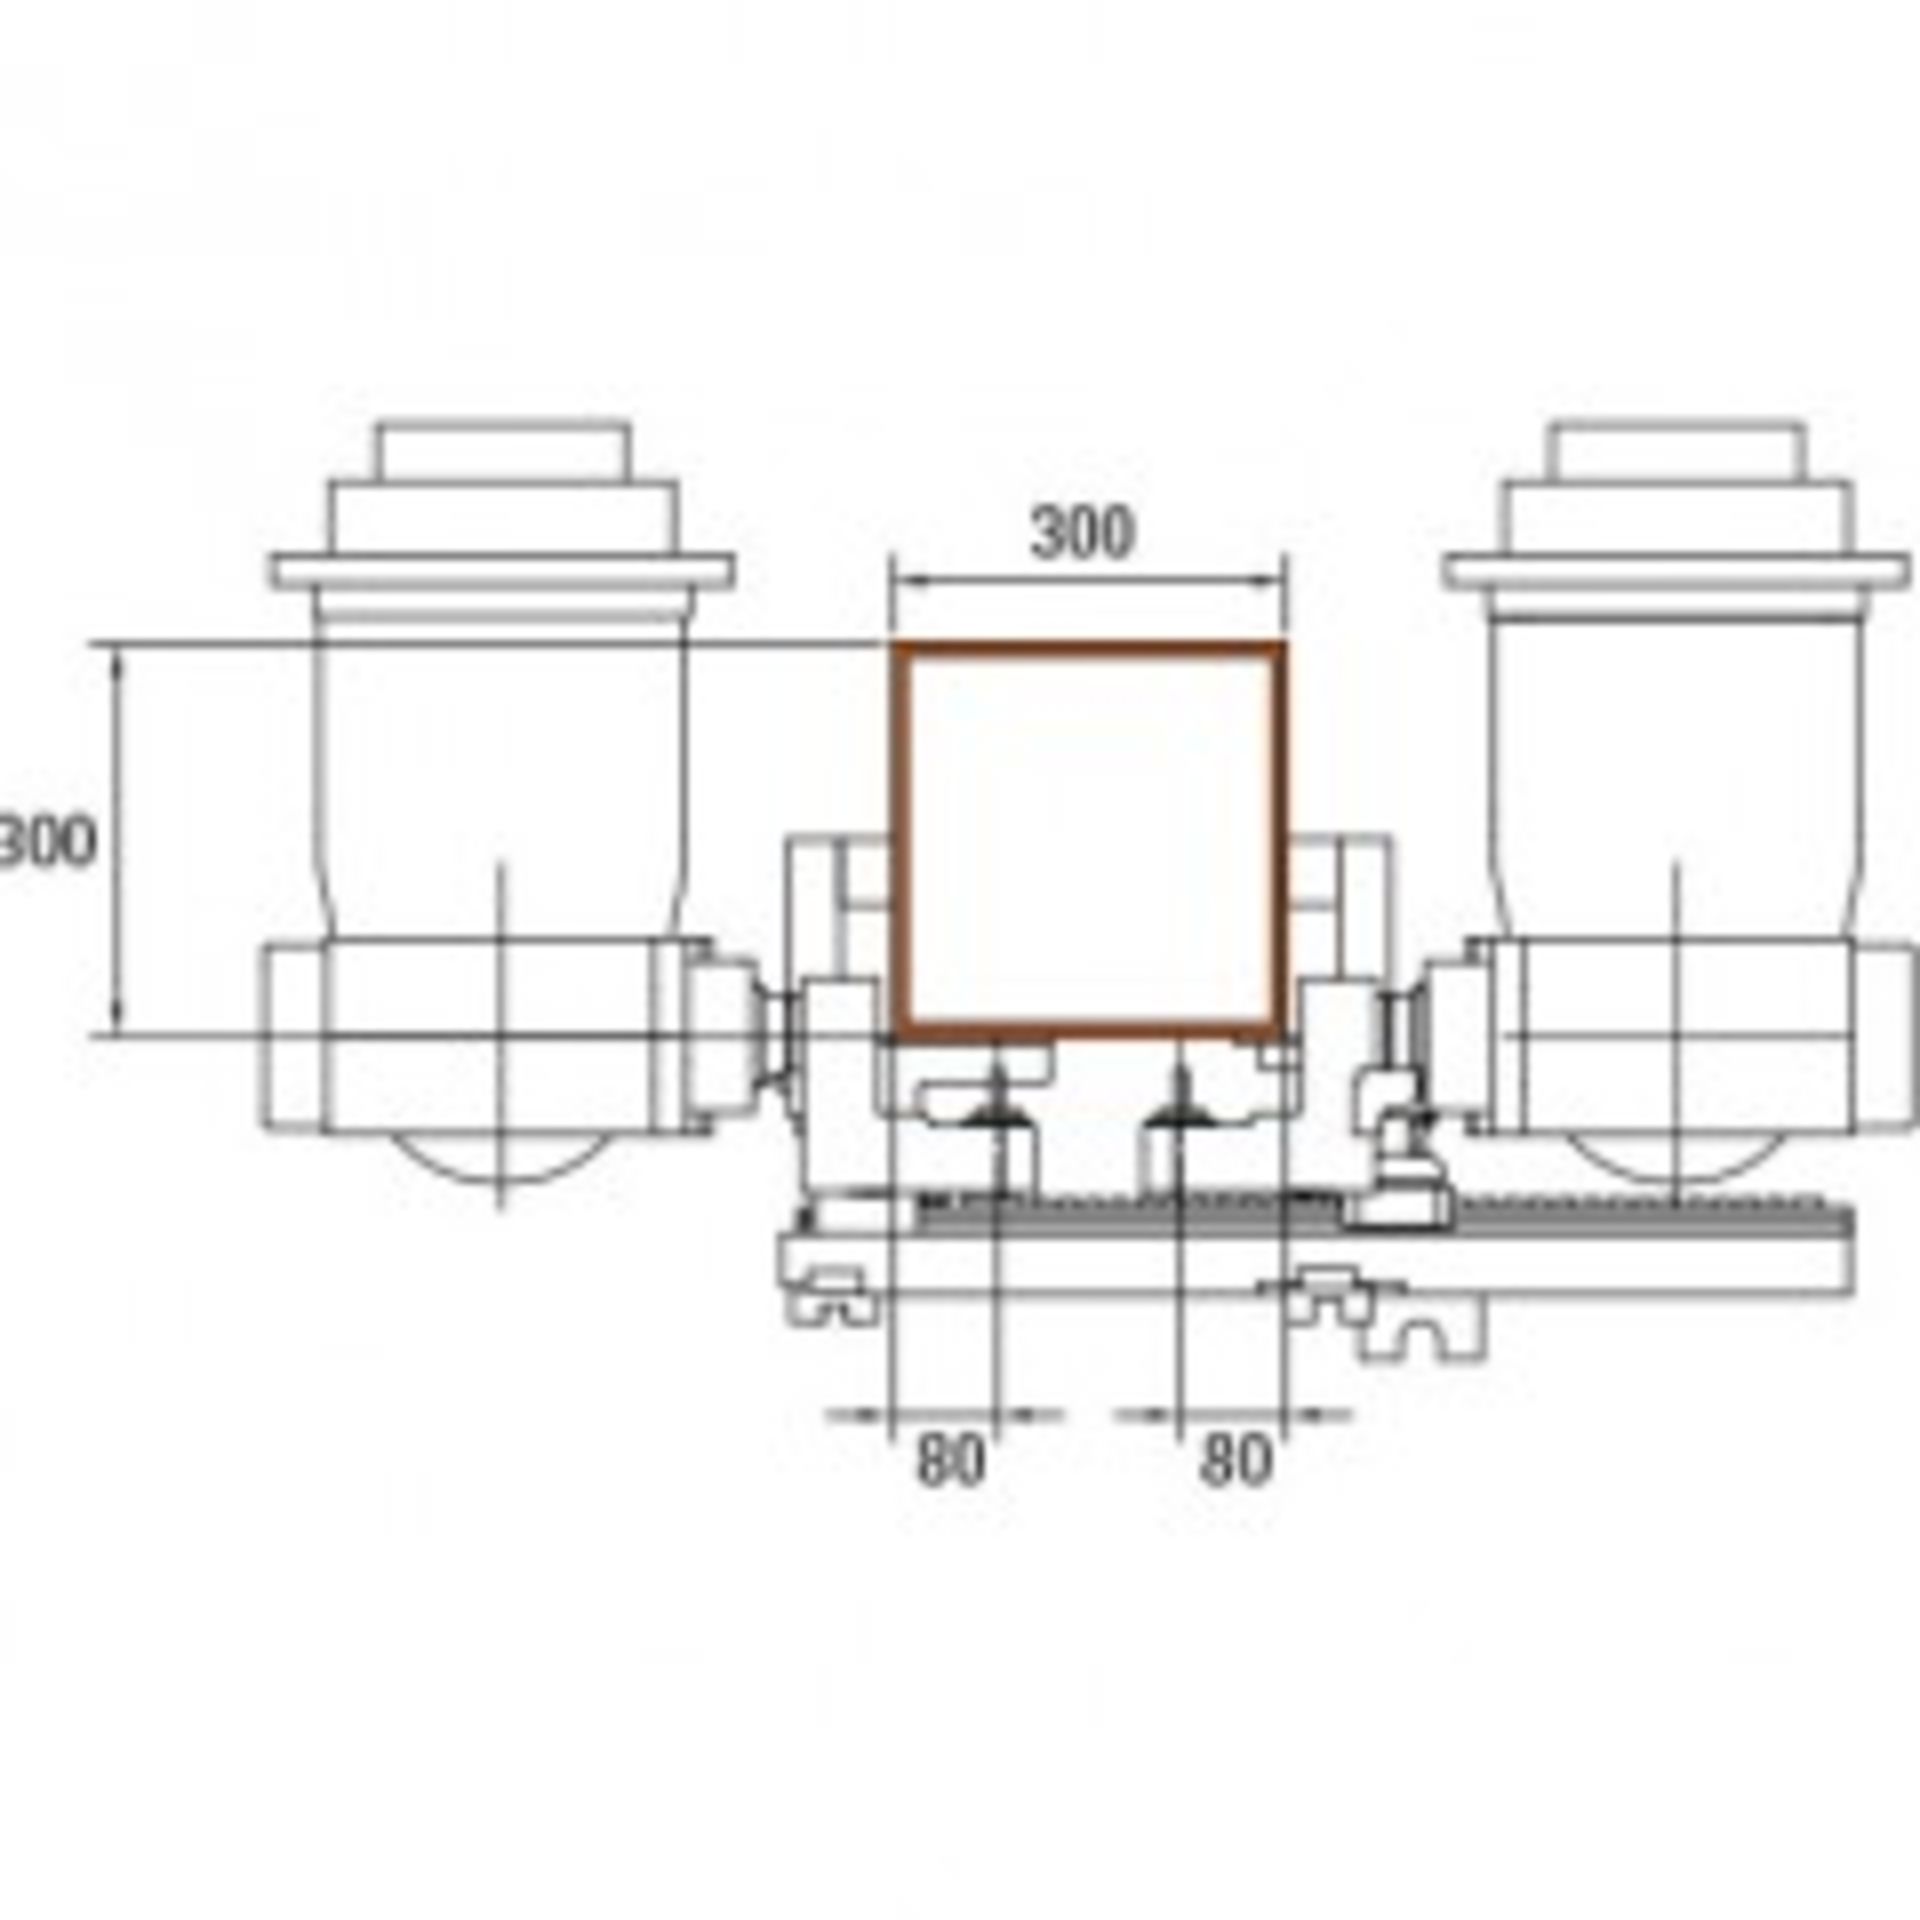 10 METER ELUMATEC SBZ 151 5-AXIS CNC PROFILE VERTICAL MACHINIG CENTER, NEW 2014 - Image 18 of 31